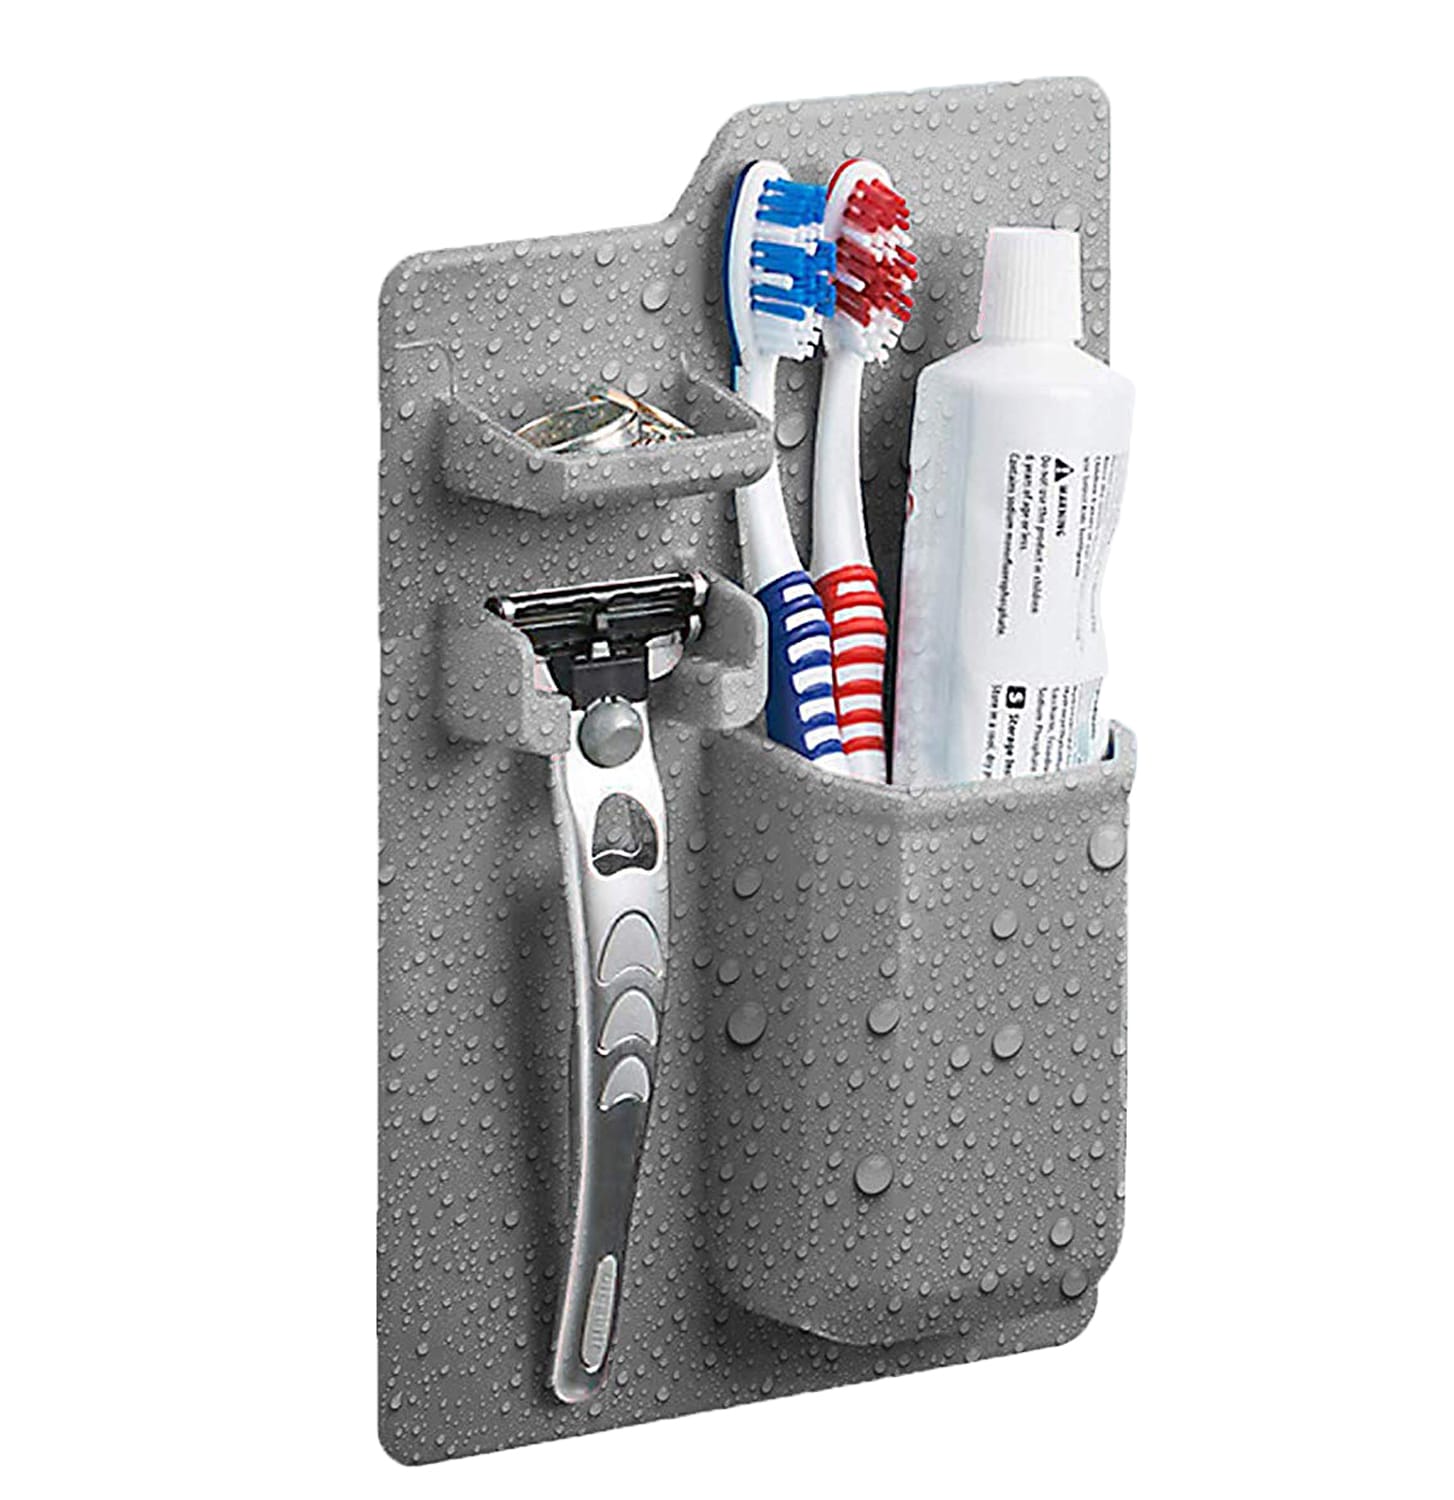 Toothbrush Holder Stainless Steel Wall Mount Rack Bathroom Tool Set Accessories 